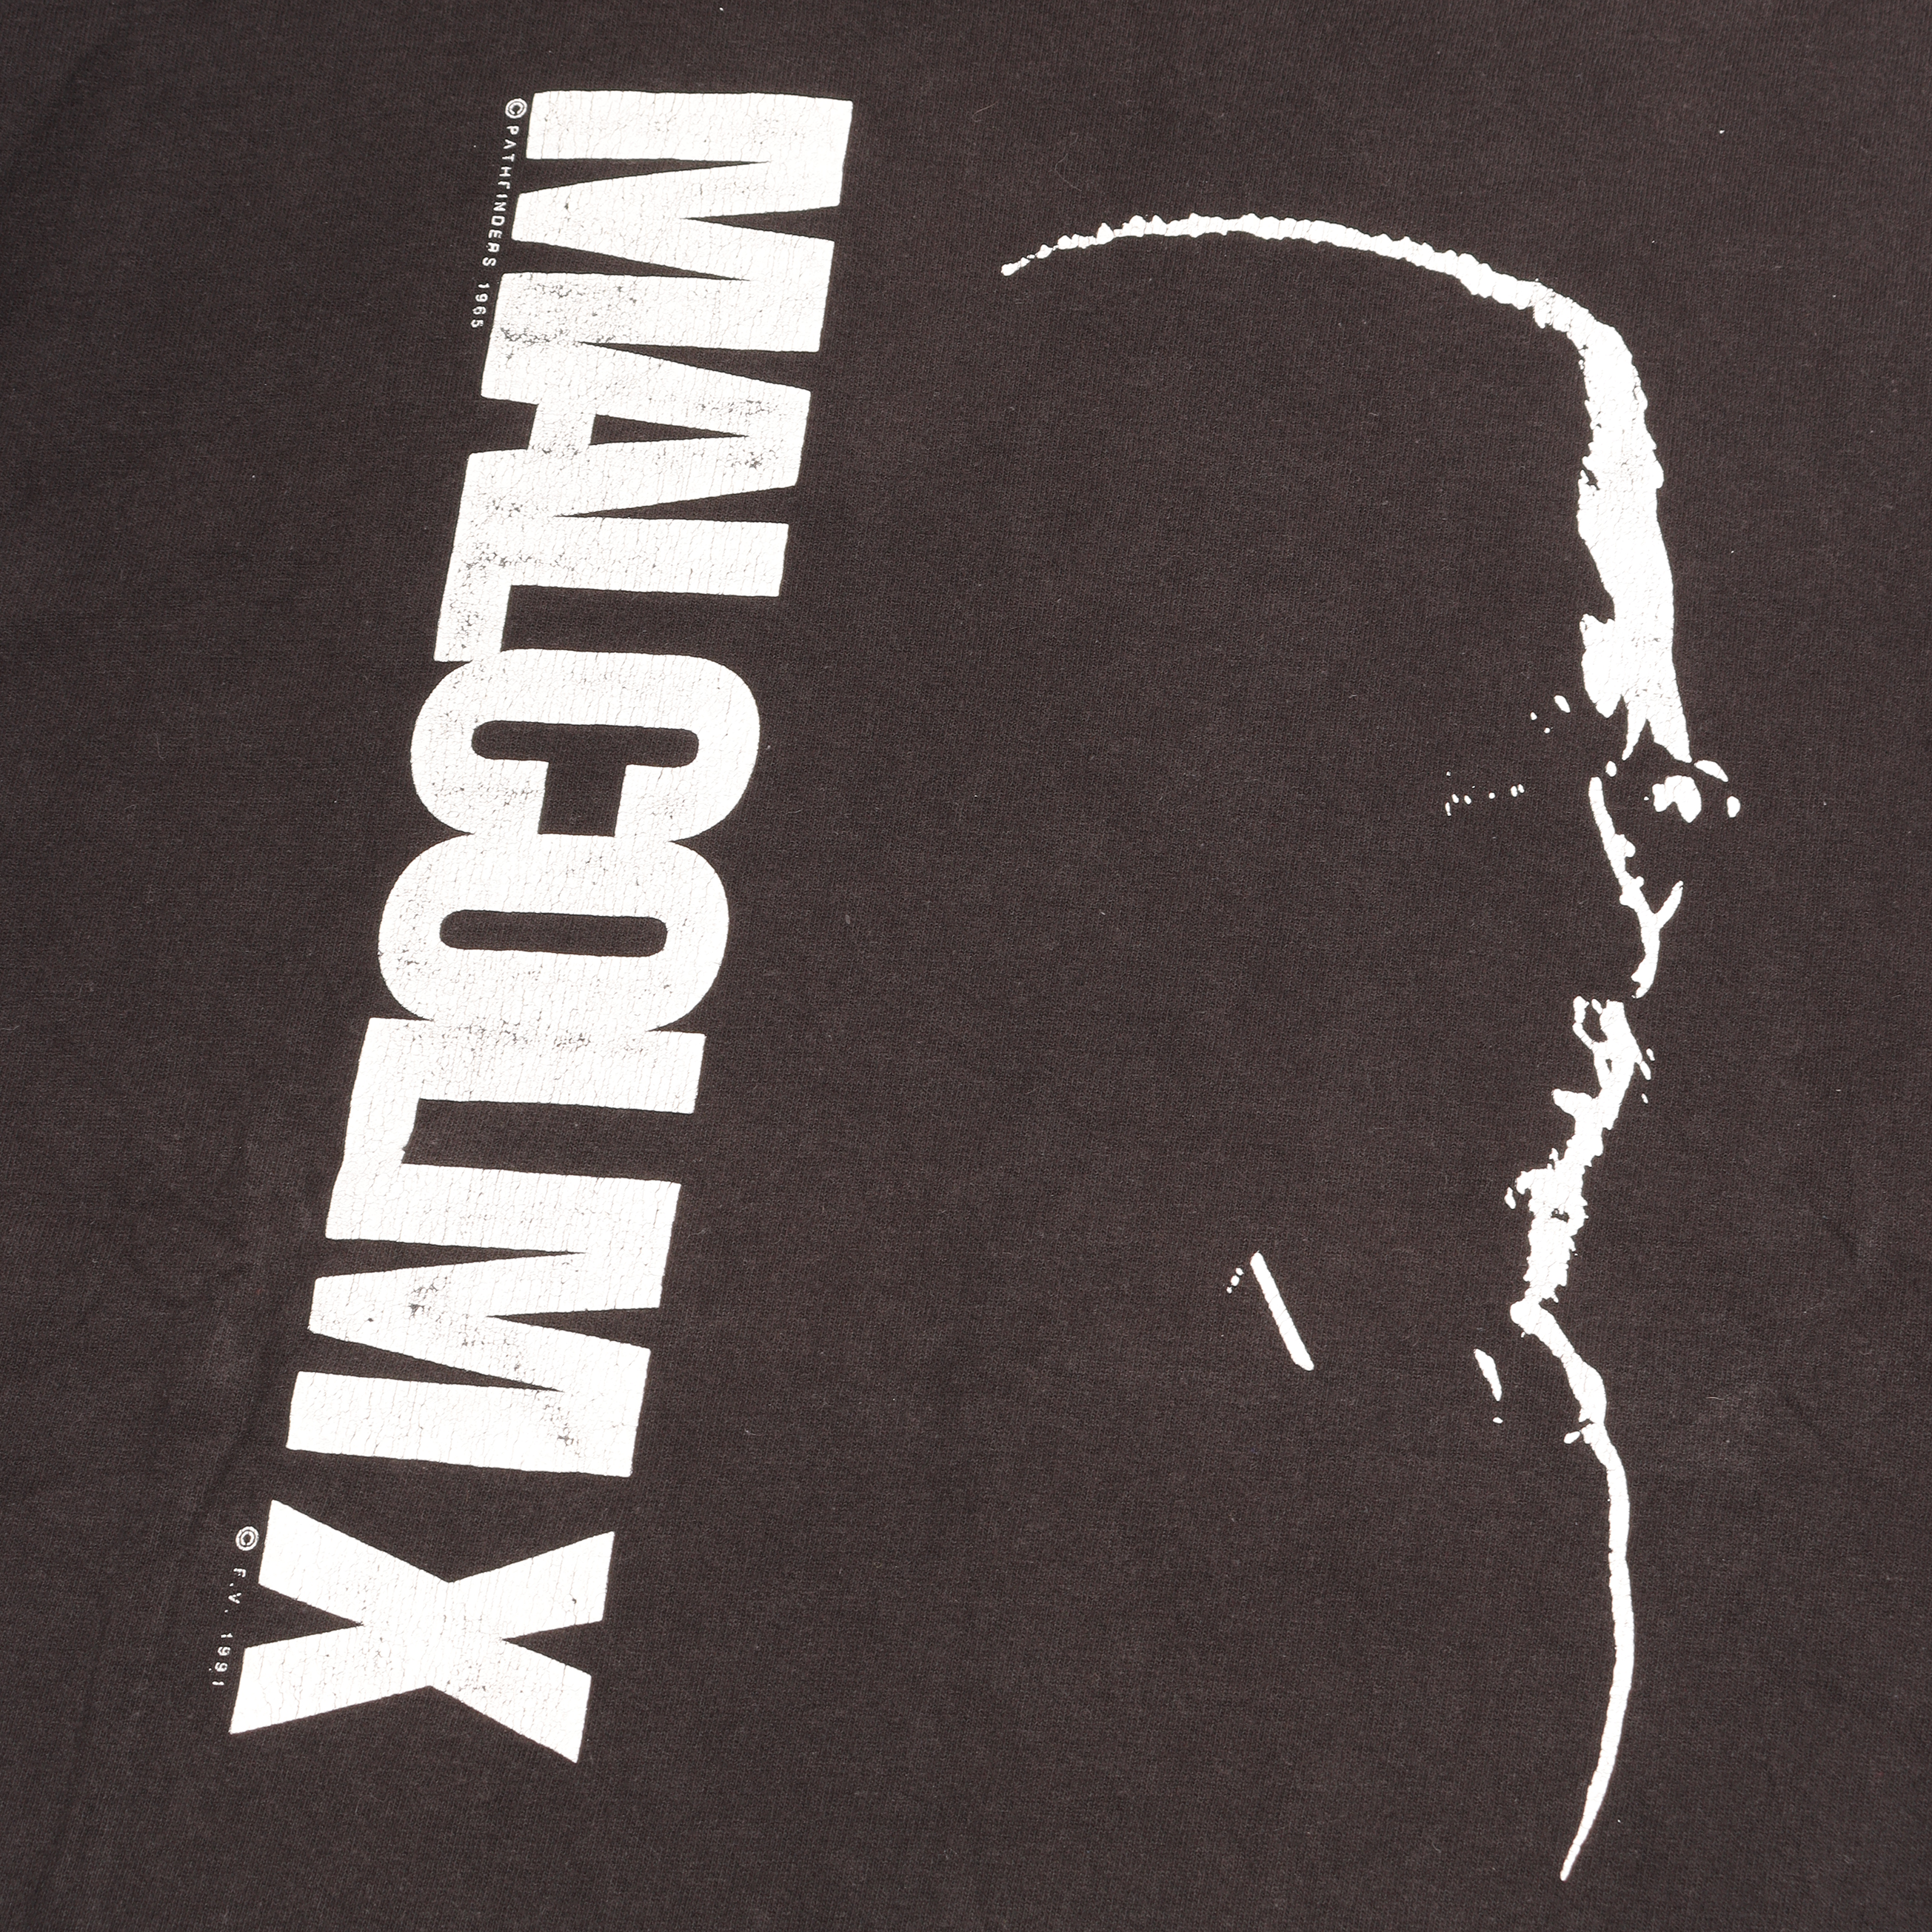 1991 Malcolm X T-Shirt